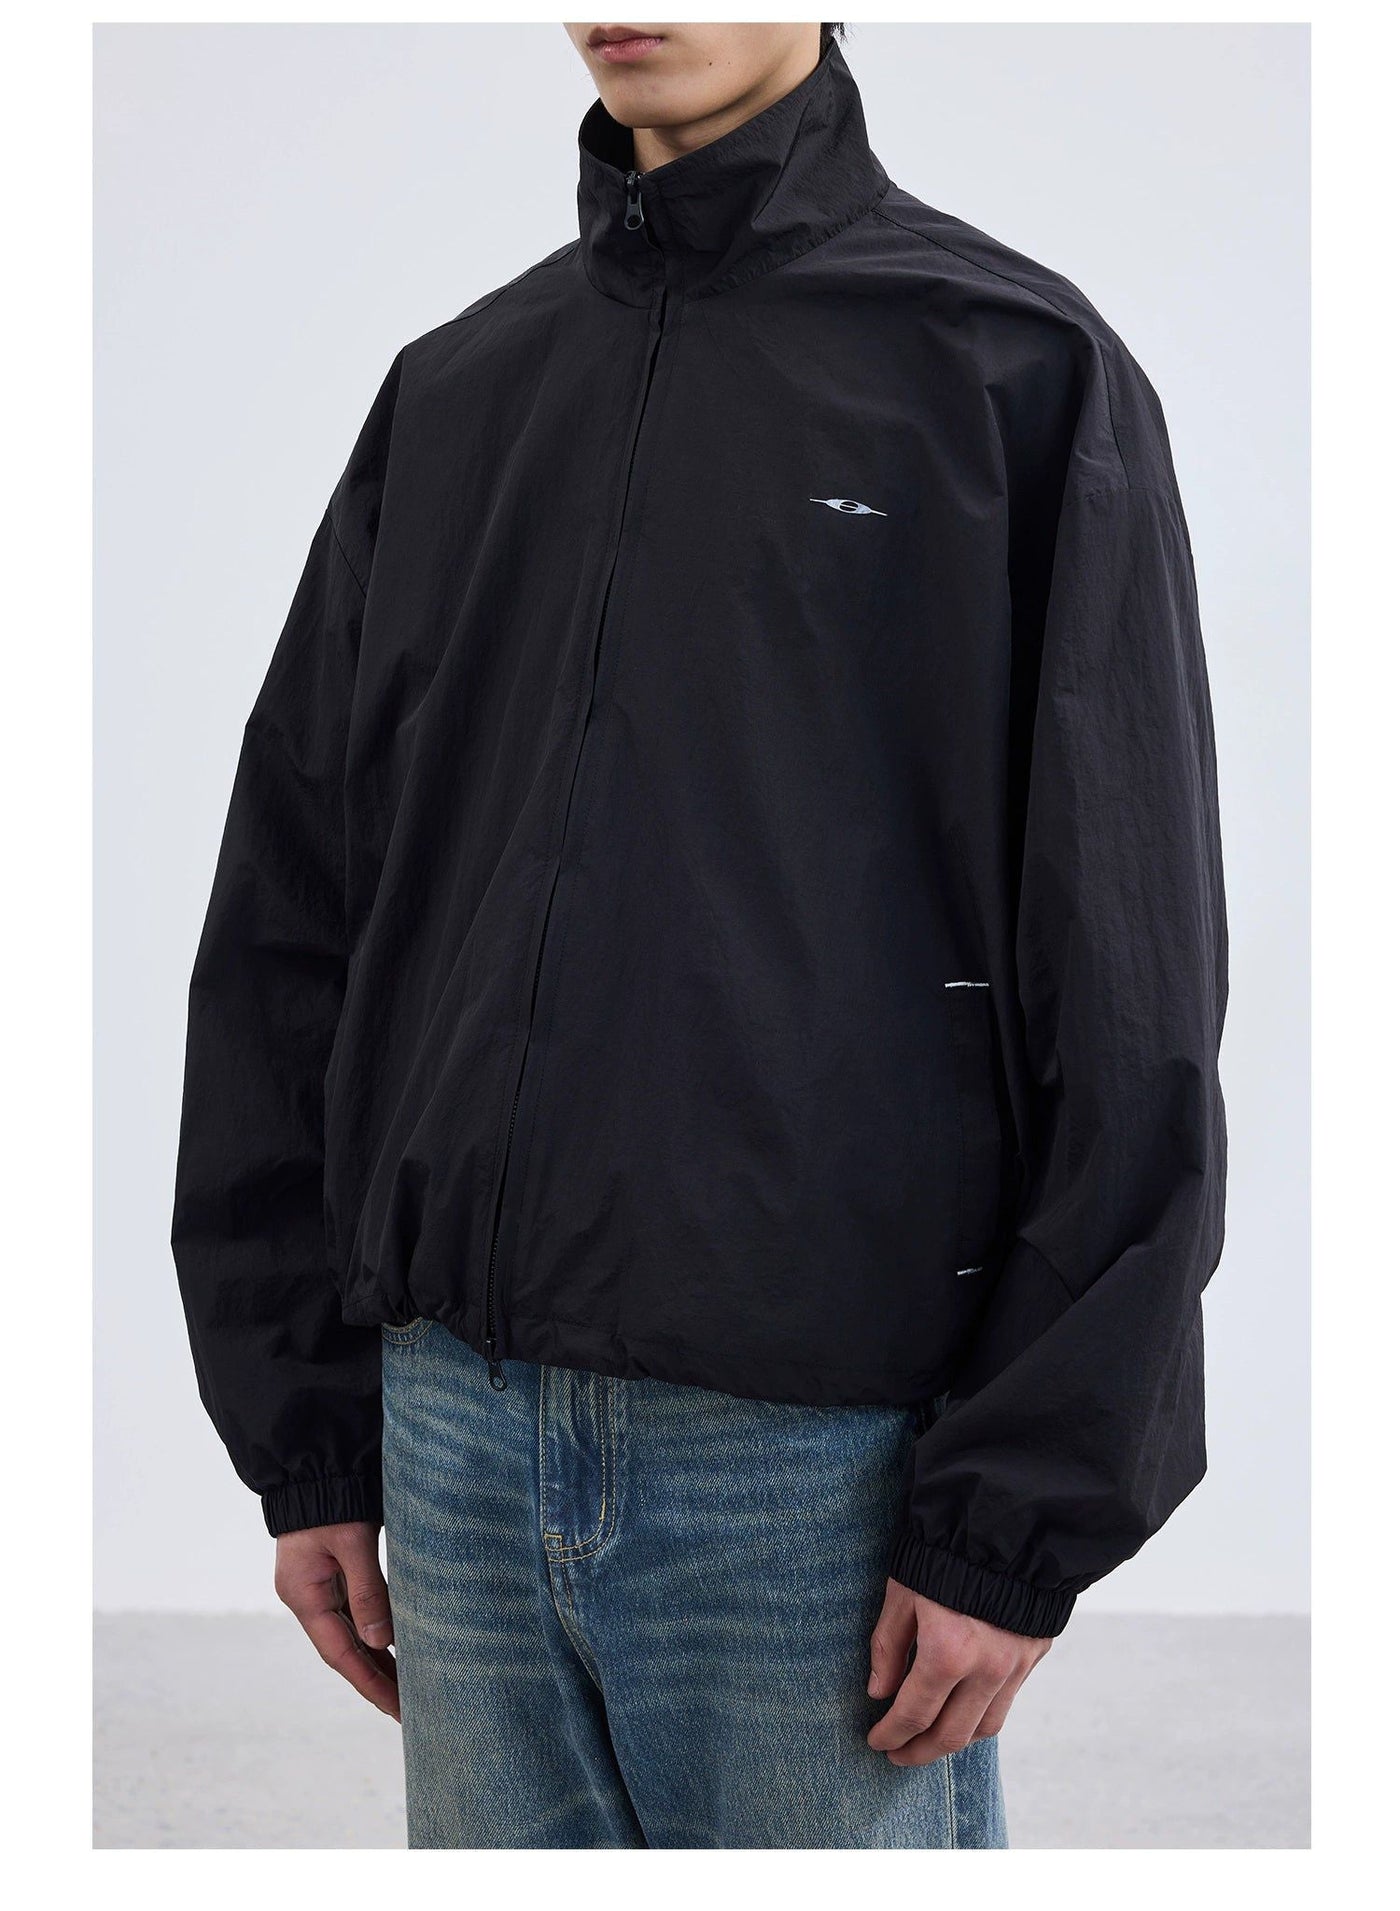 Two Zip Heads Windbreaker Jacket Korean Street Fashion Jacket By Terra Incognita Shop Online at OH Vault